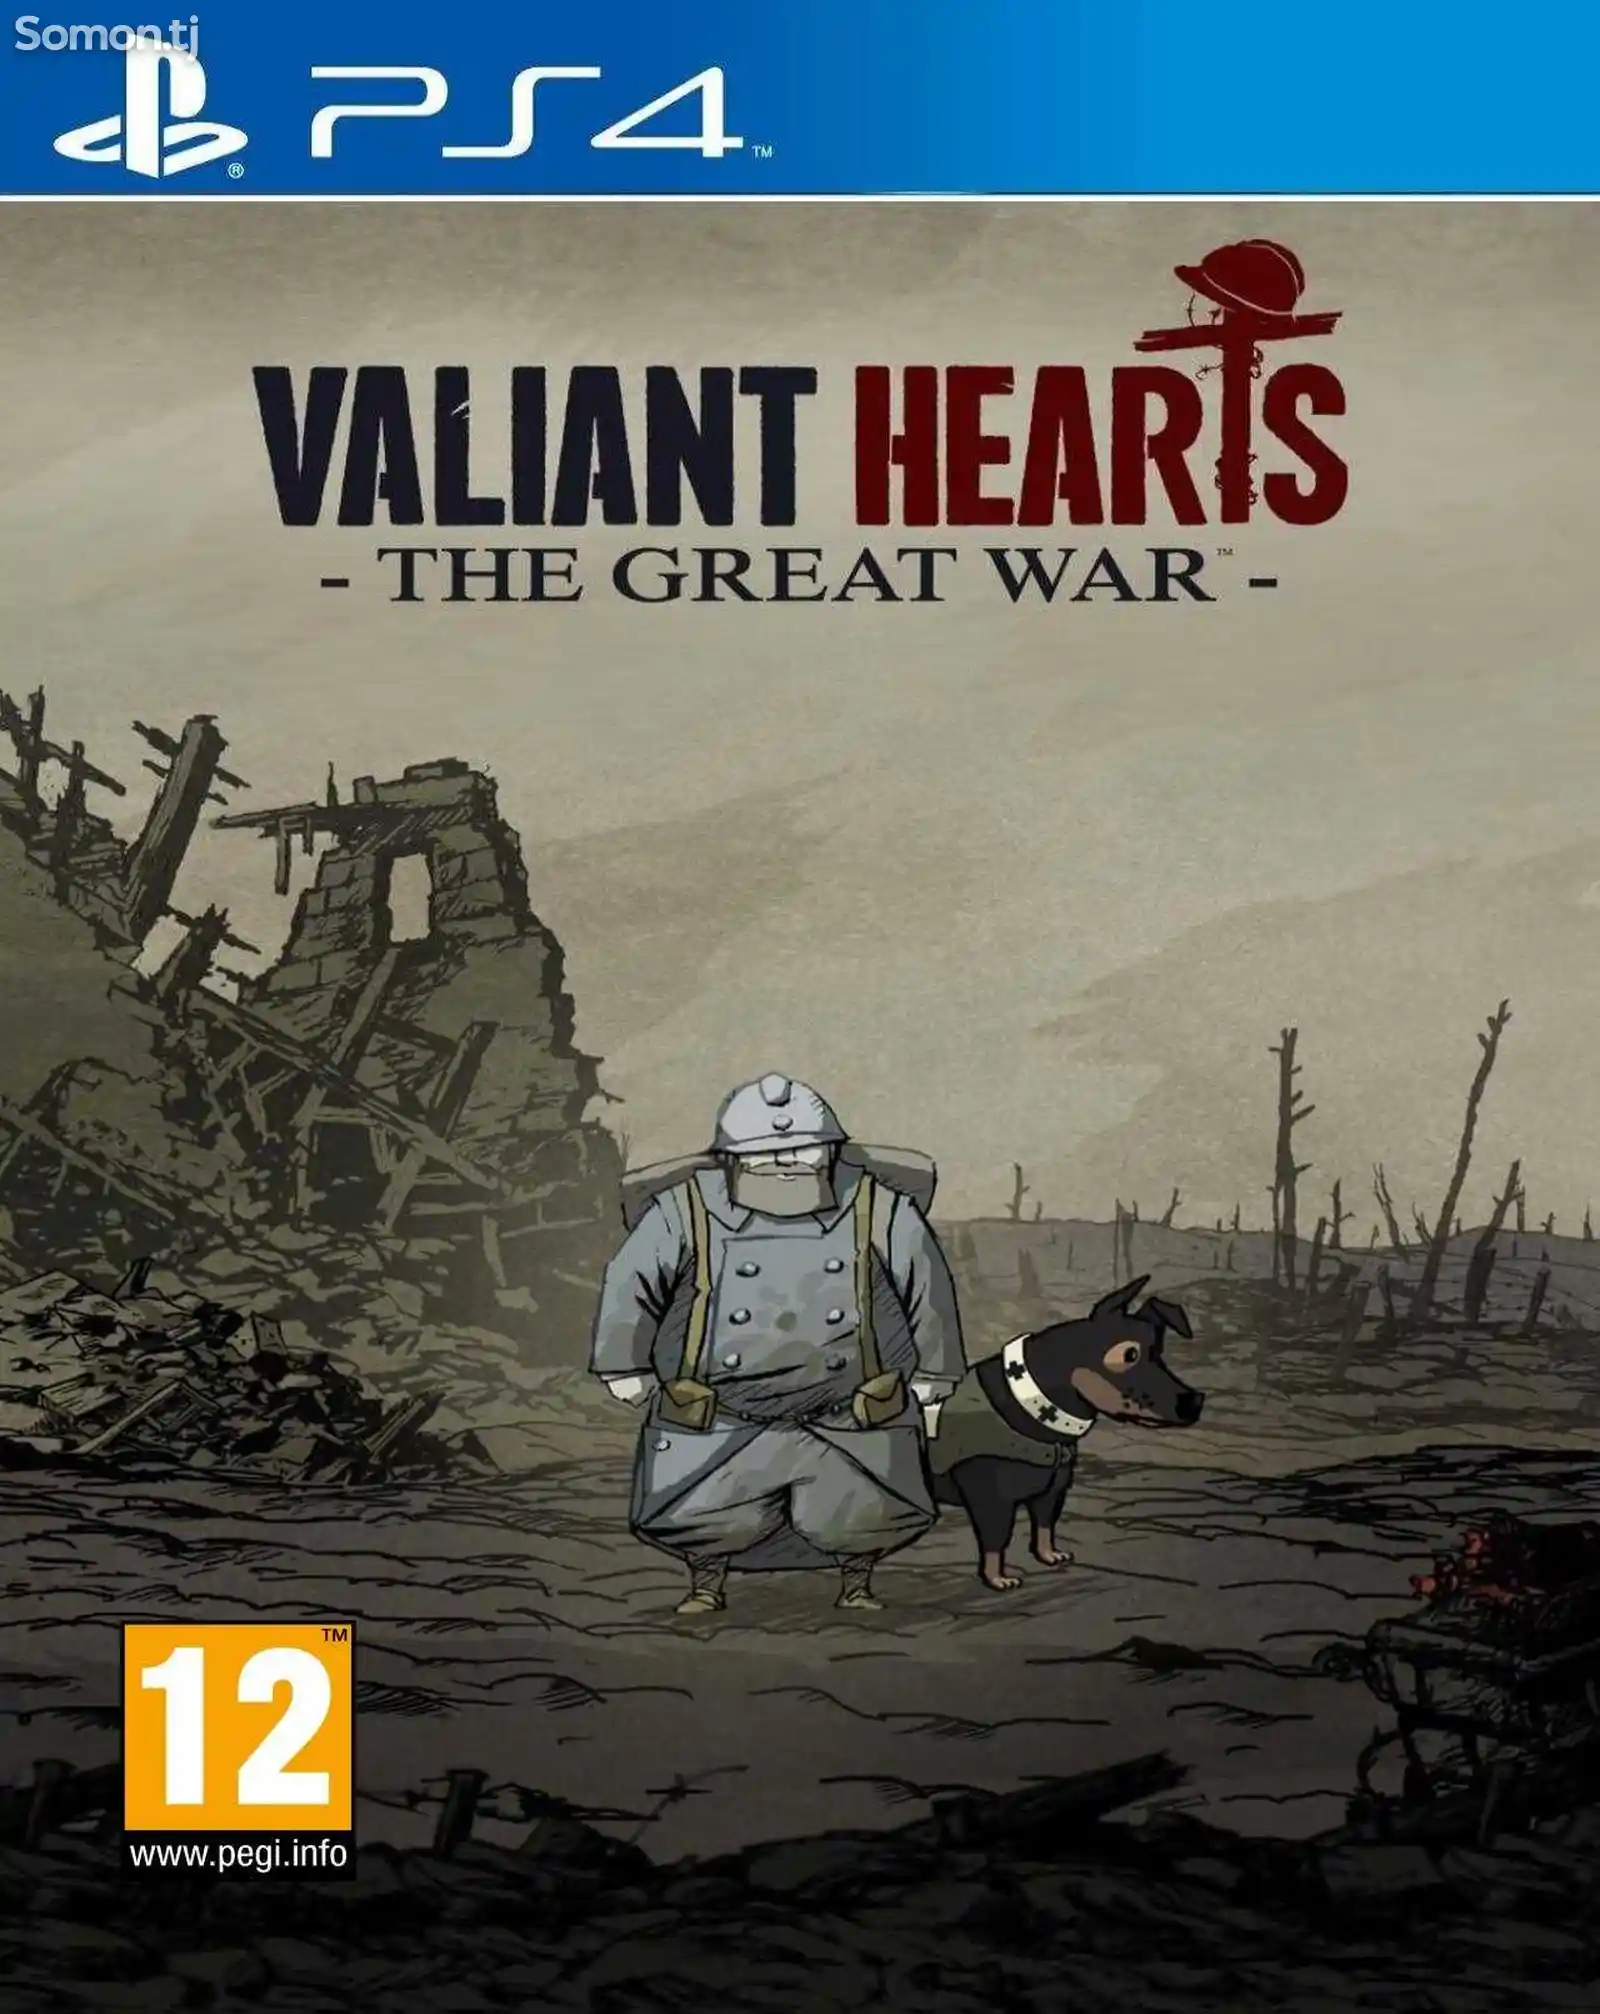 Игра Valiant hearths the great war для PS-4 / 5.05 / 6.72 / 7.02 / 7.55 / 9.00 /-1